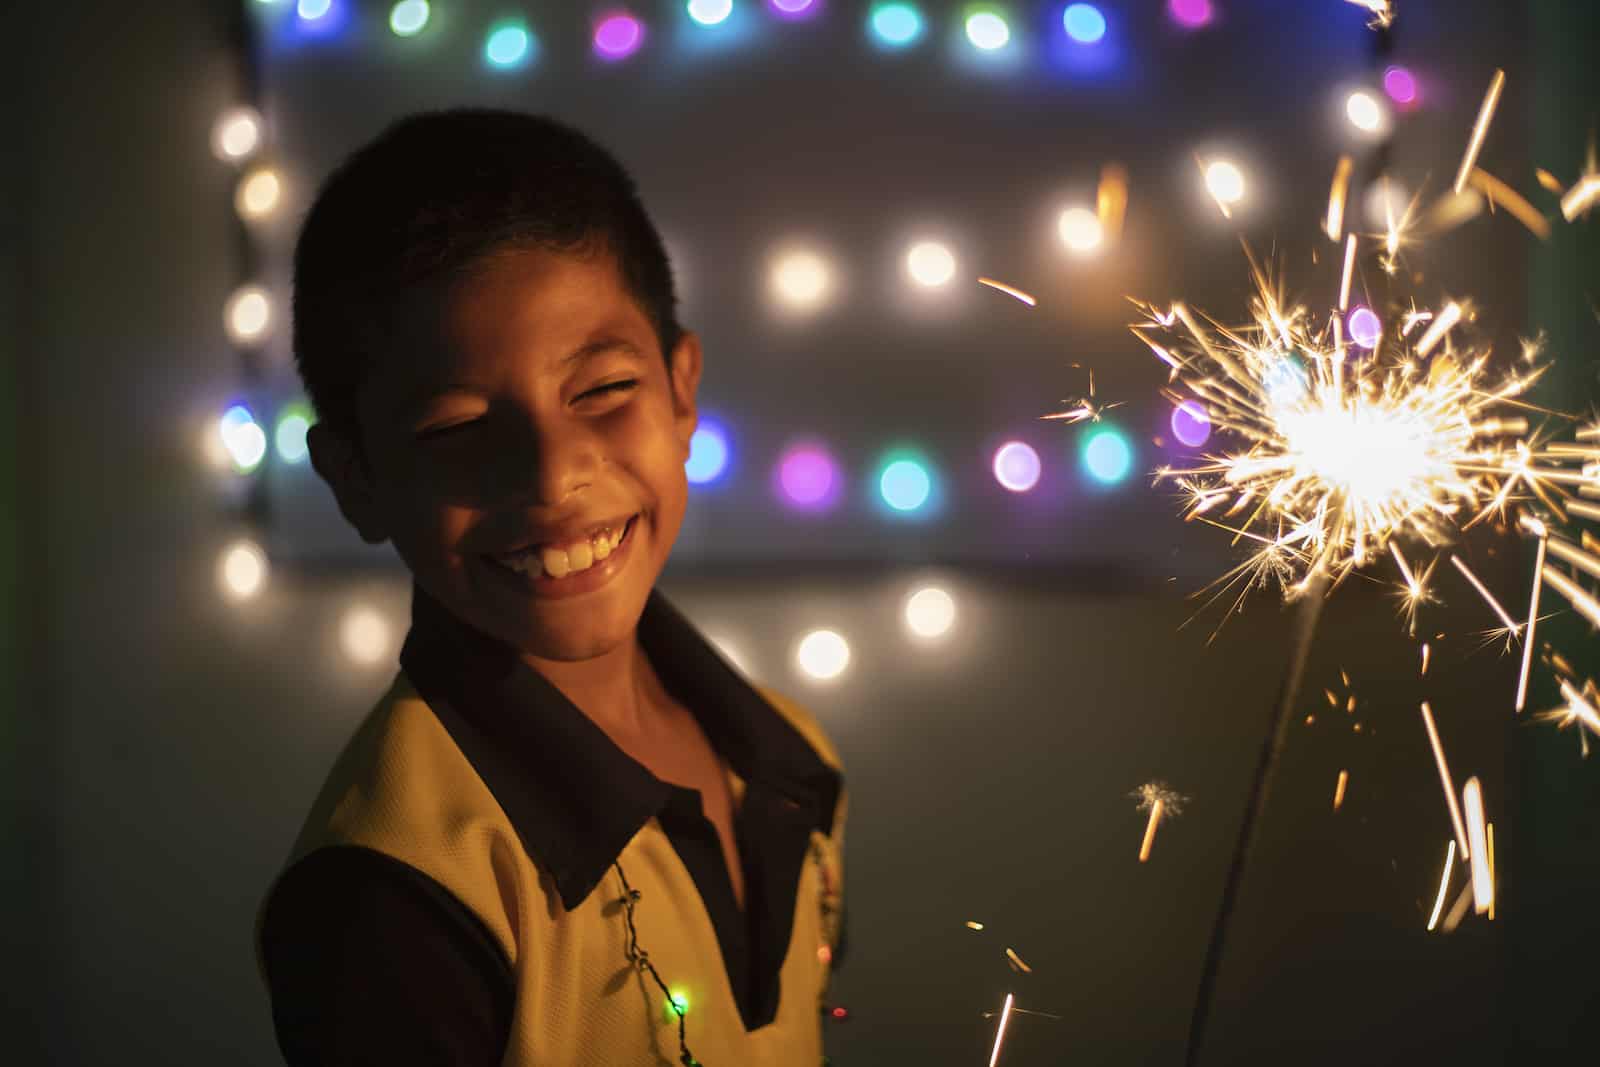 A boy holds a sparkler, surrounded by lights celebrating Christmas in El Salvador